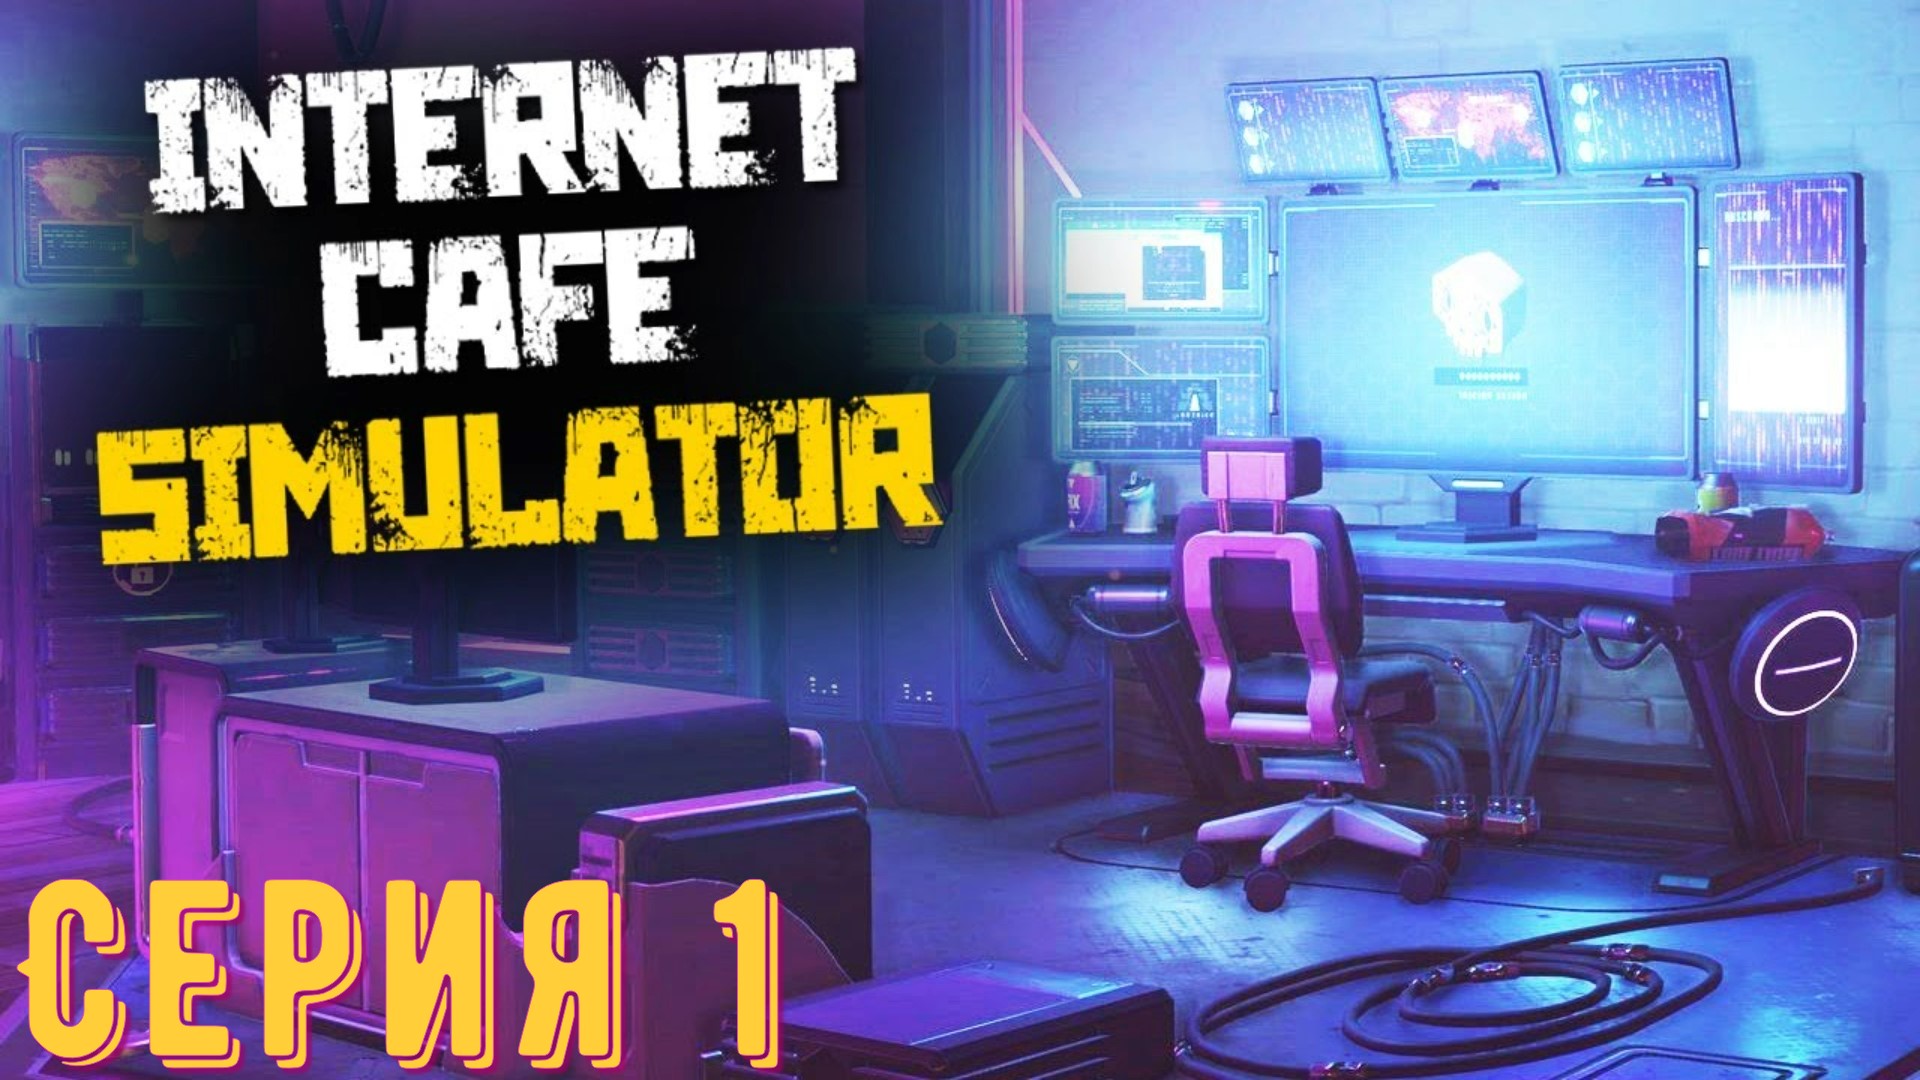 Internet cafe simulator 2. Интернет кафе симулятор 2. Клуб компьютерных игр. Симулятор компьютерного клуба 2. Интернет кафе симулятор 2 клуб.